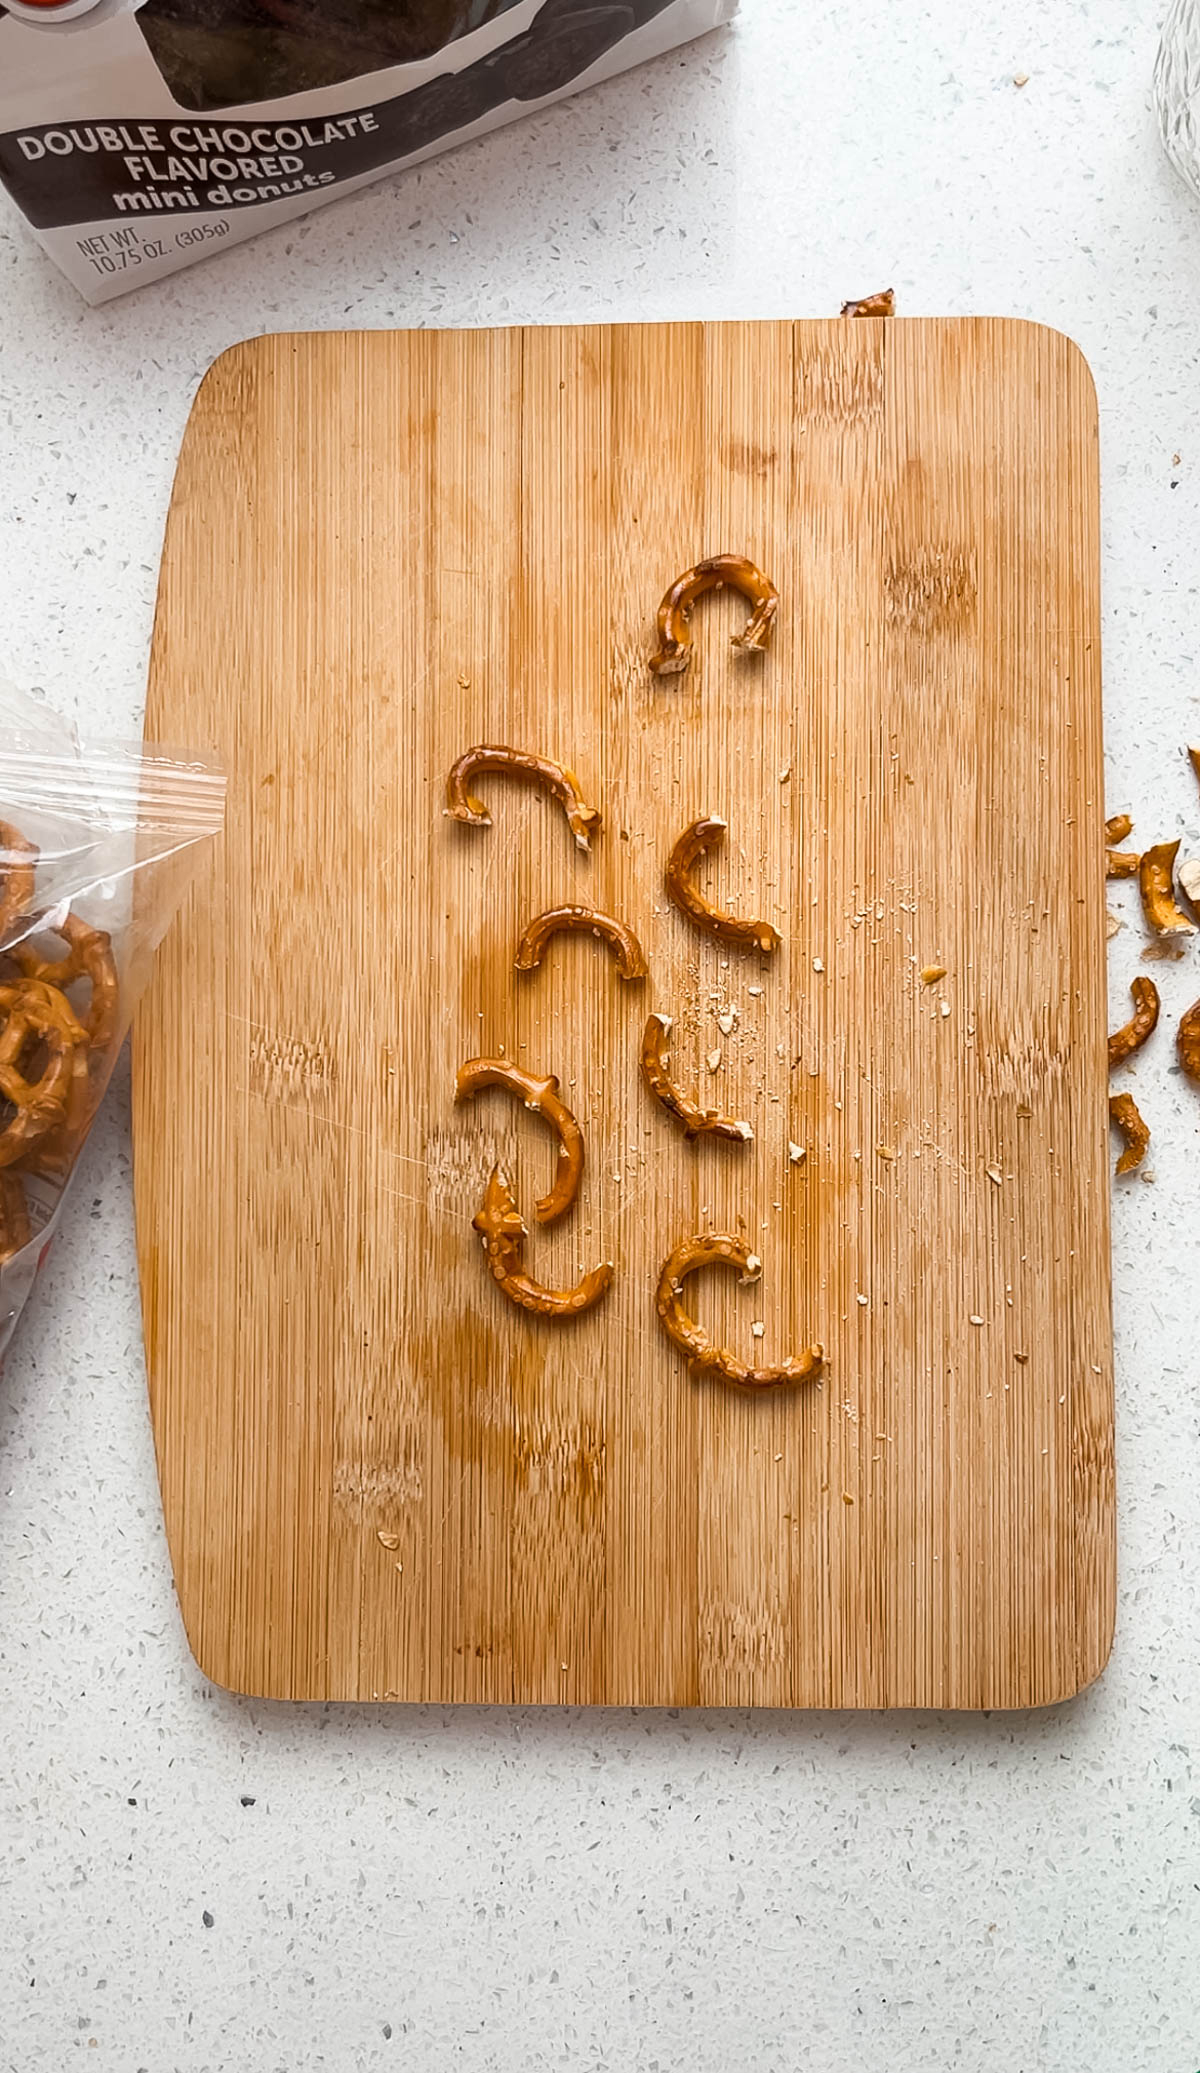 Broken pretzel pieces on wood cutting board.